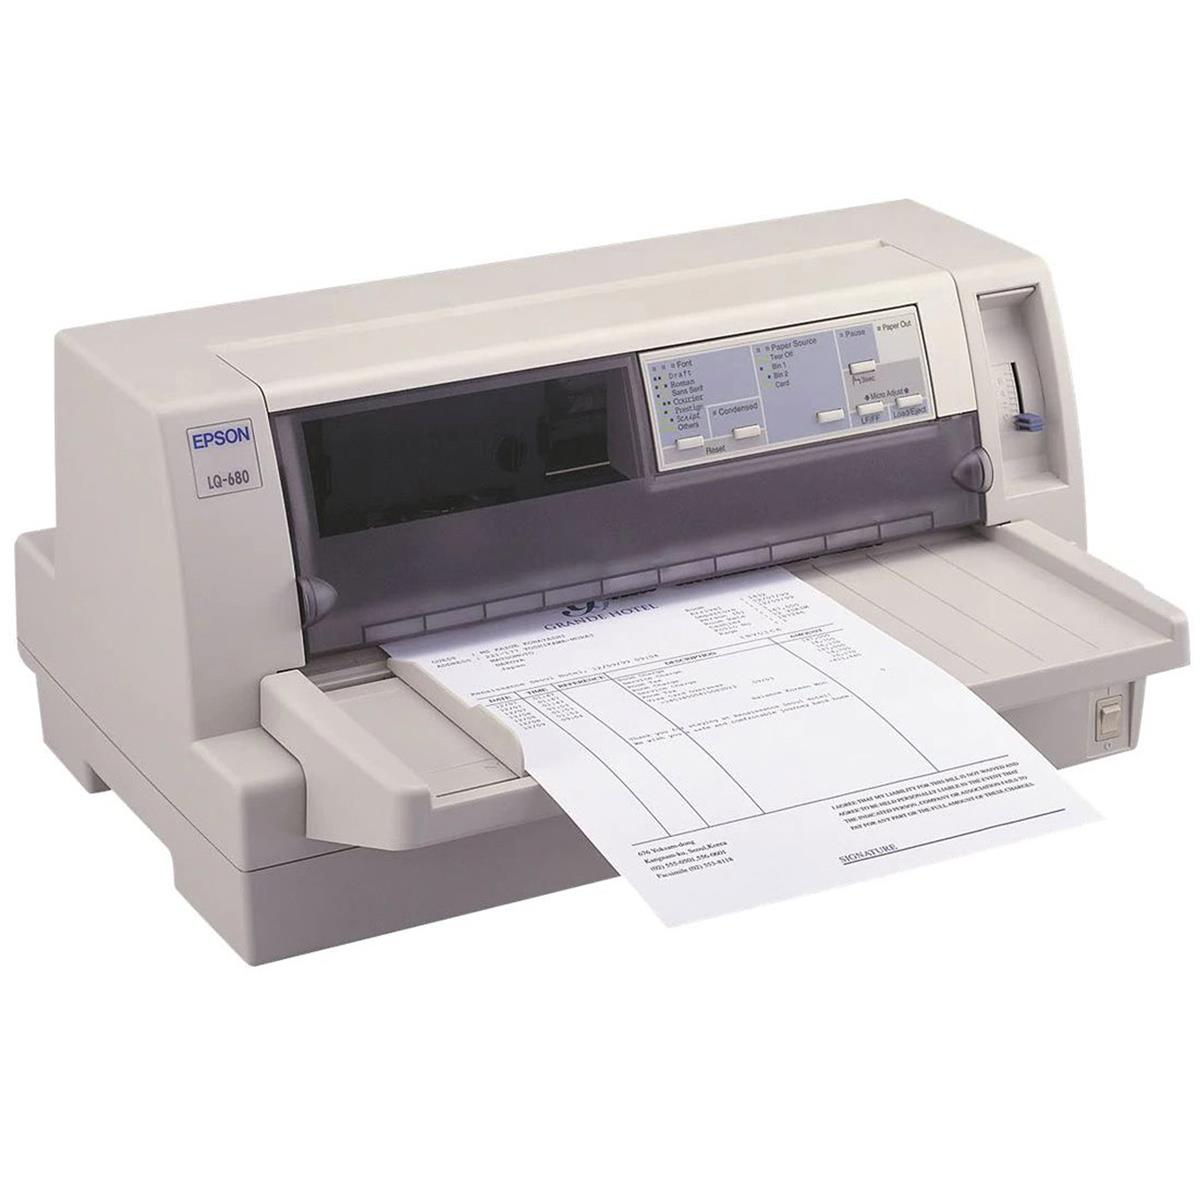 LQ-680pro 24-Pin Dot Matrix Printer - Epson C376101